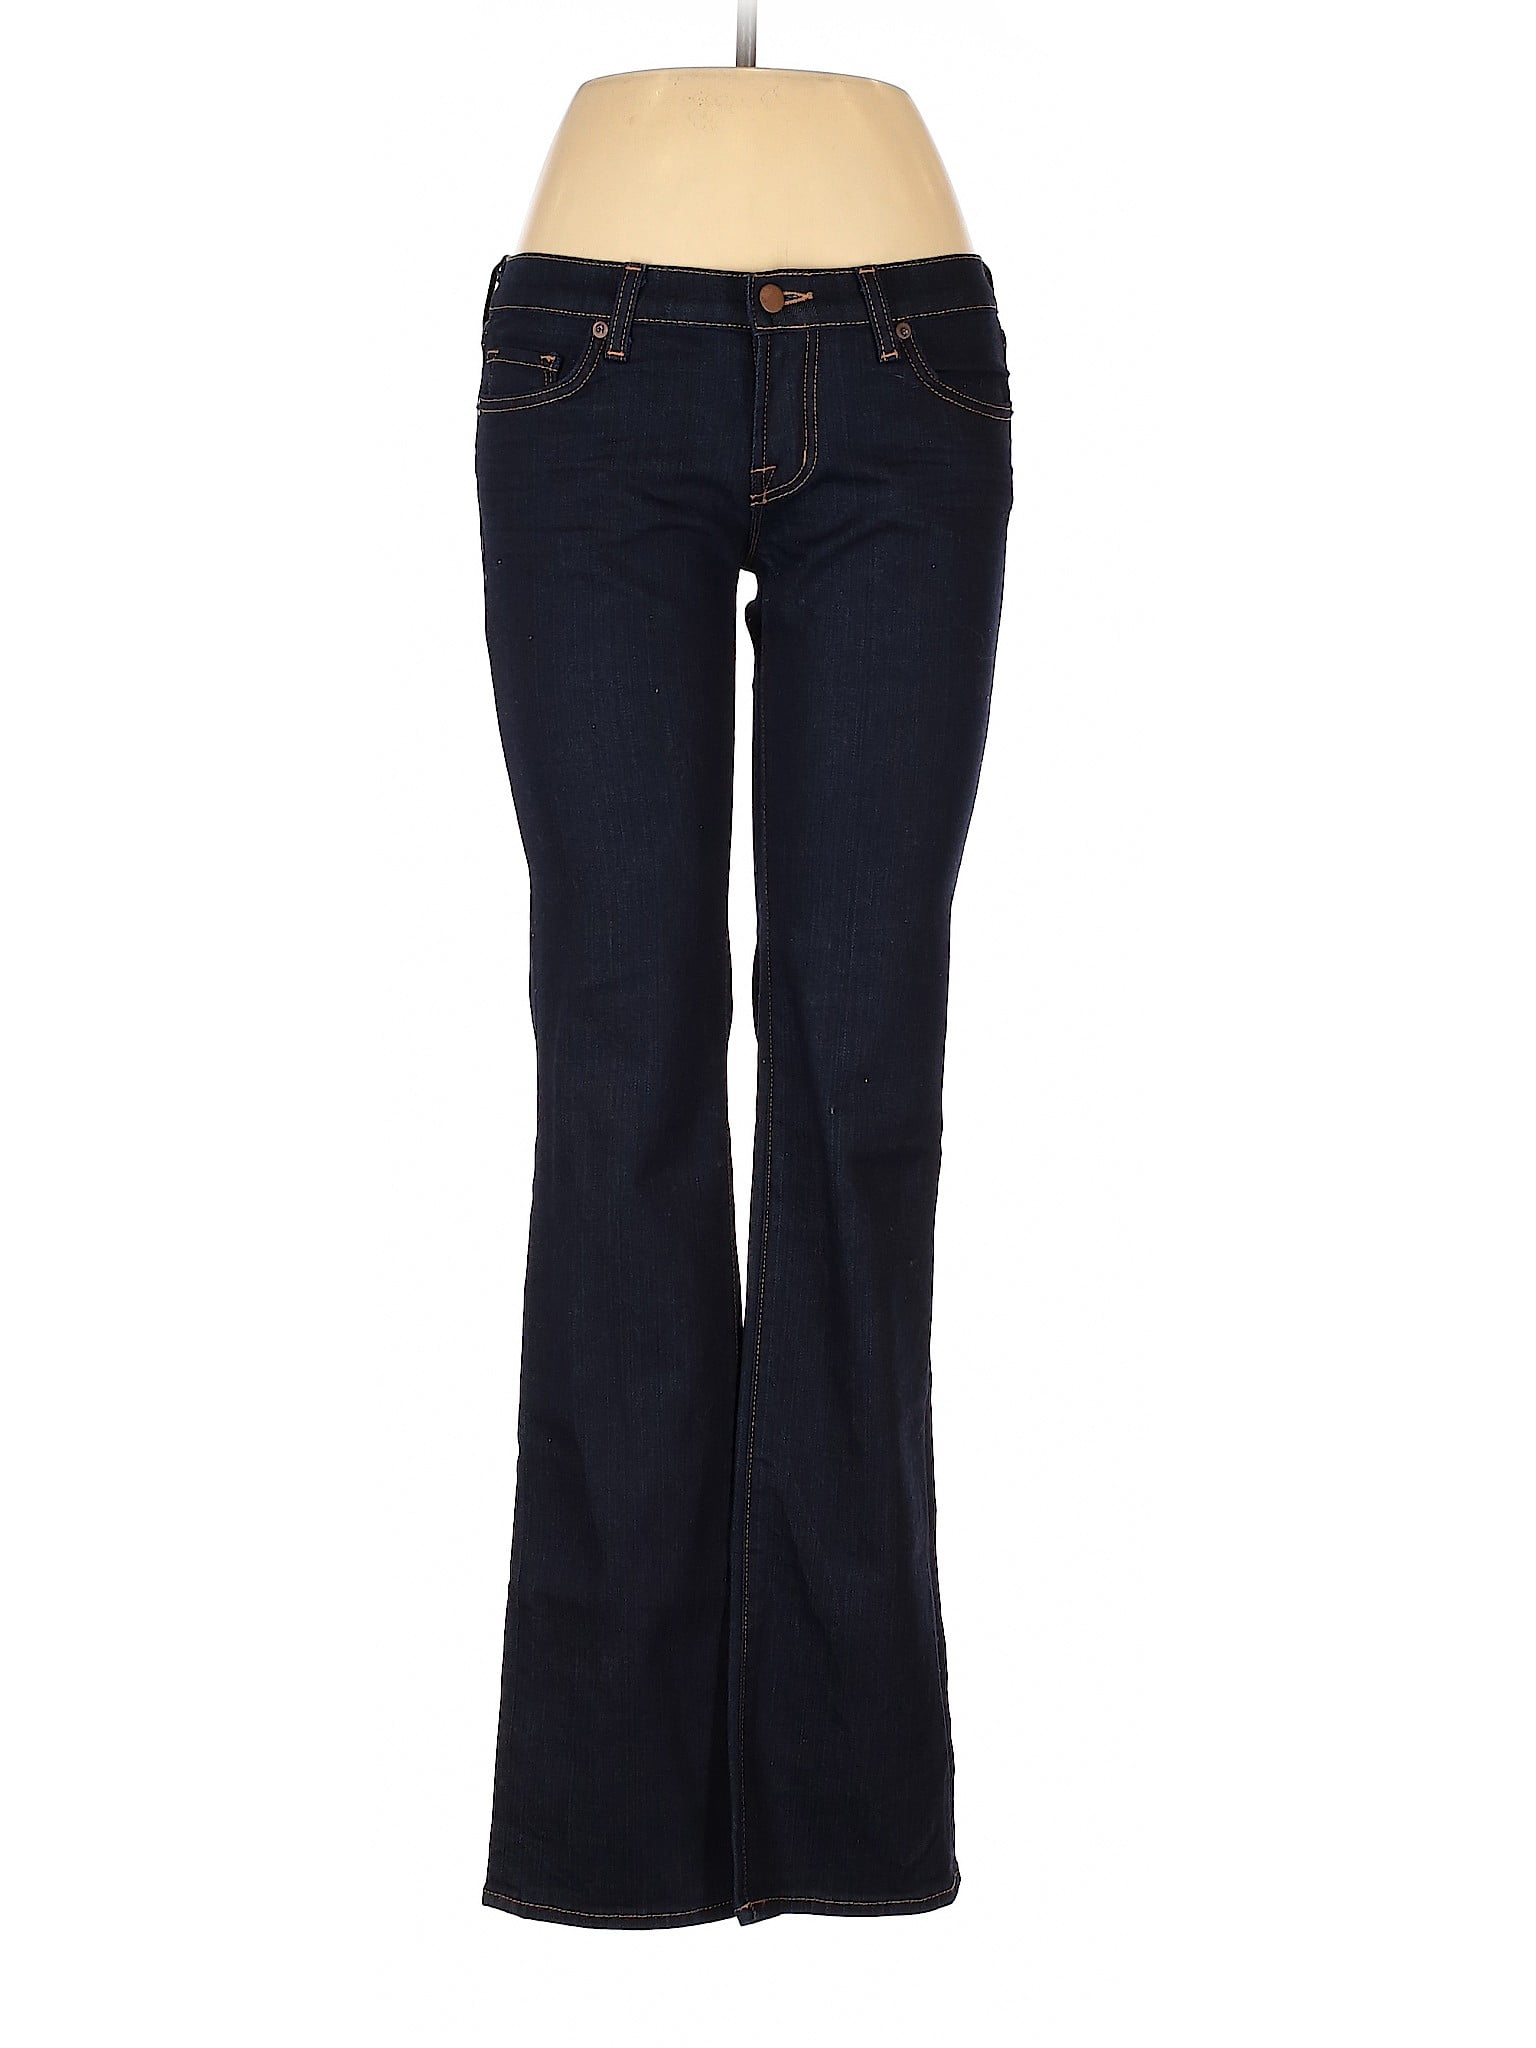 J BRAND - Pre-Owned J Brand Women's Size 28W Jeans - Walmart.com ...